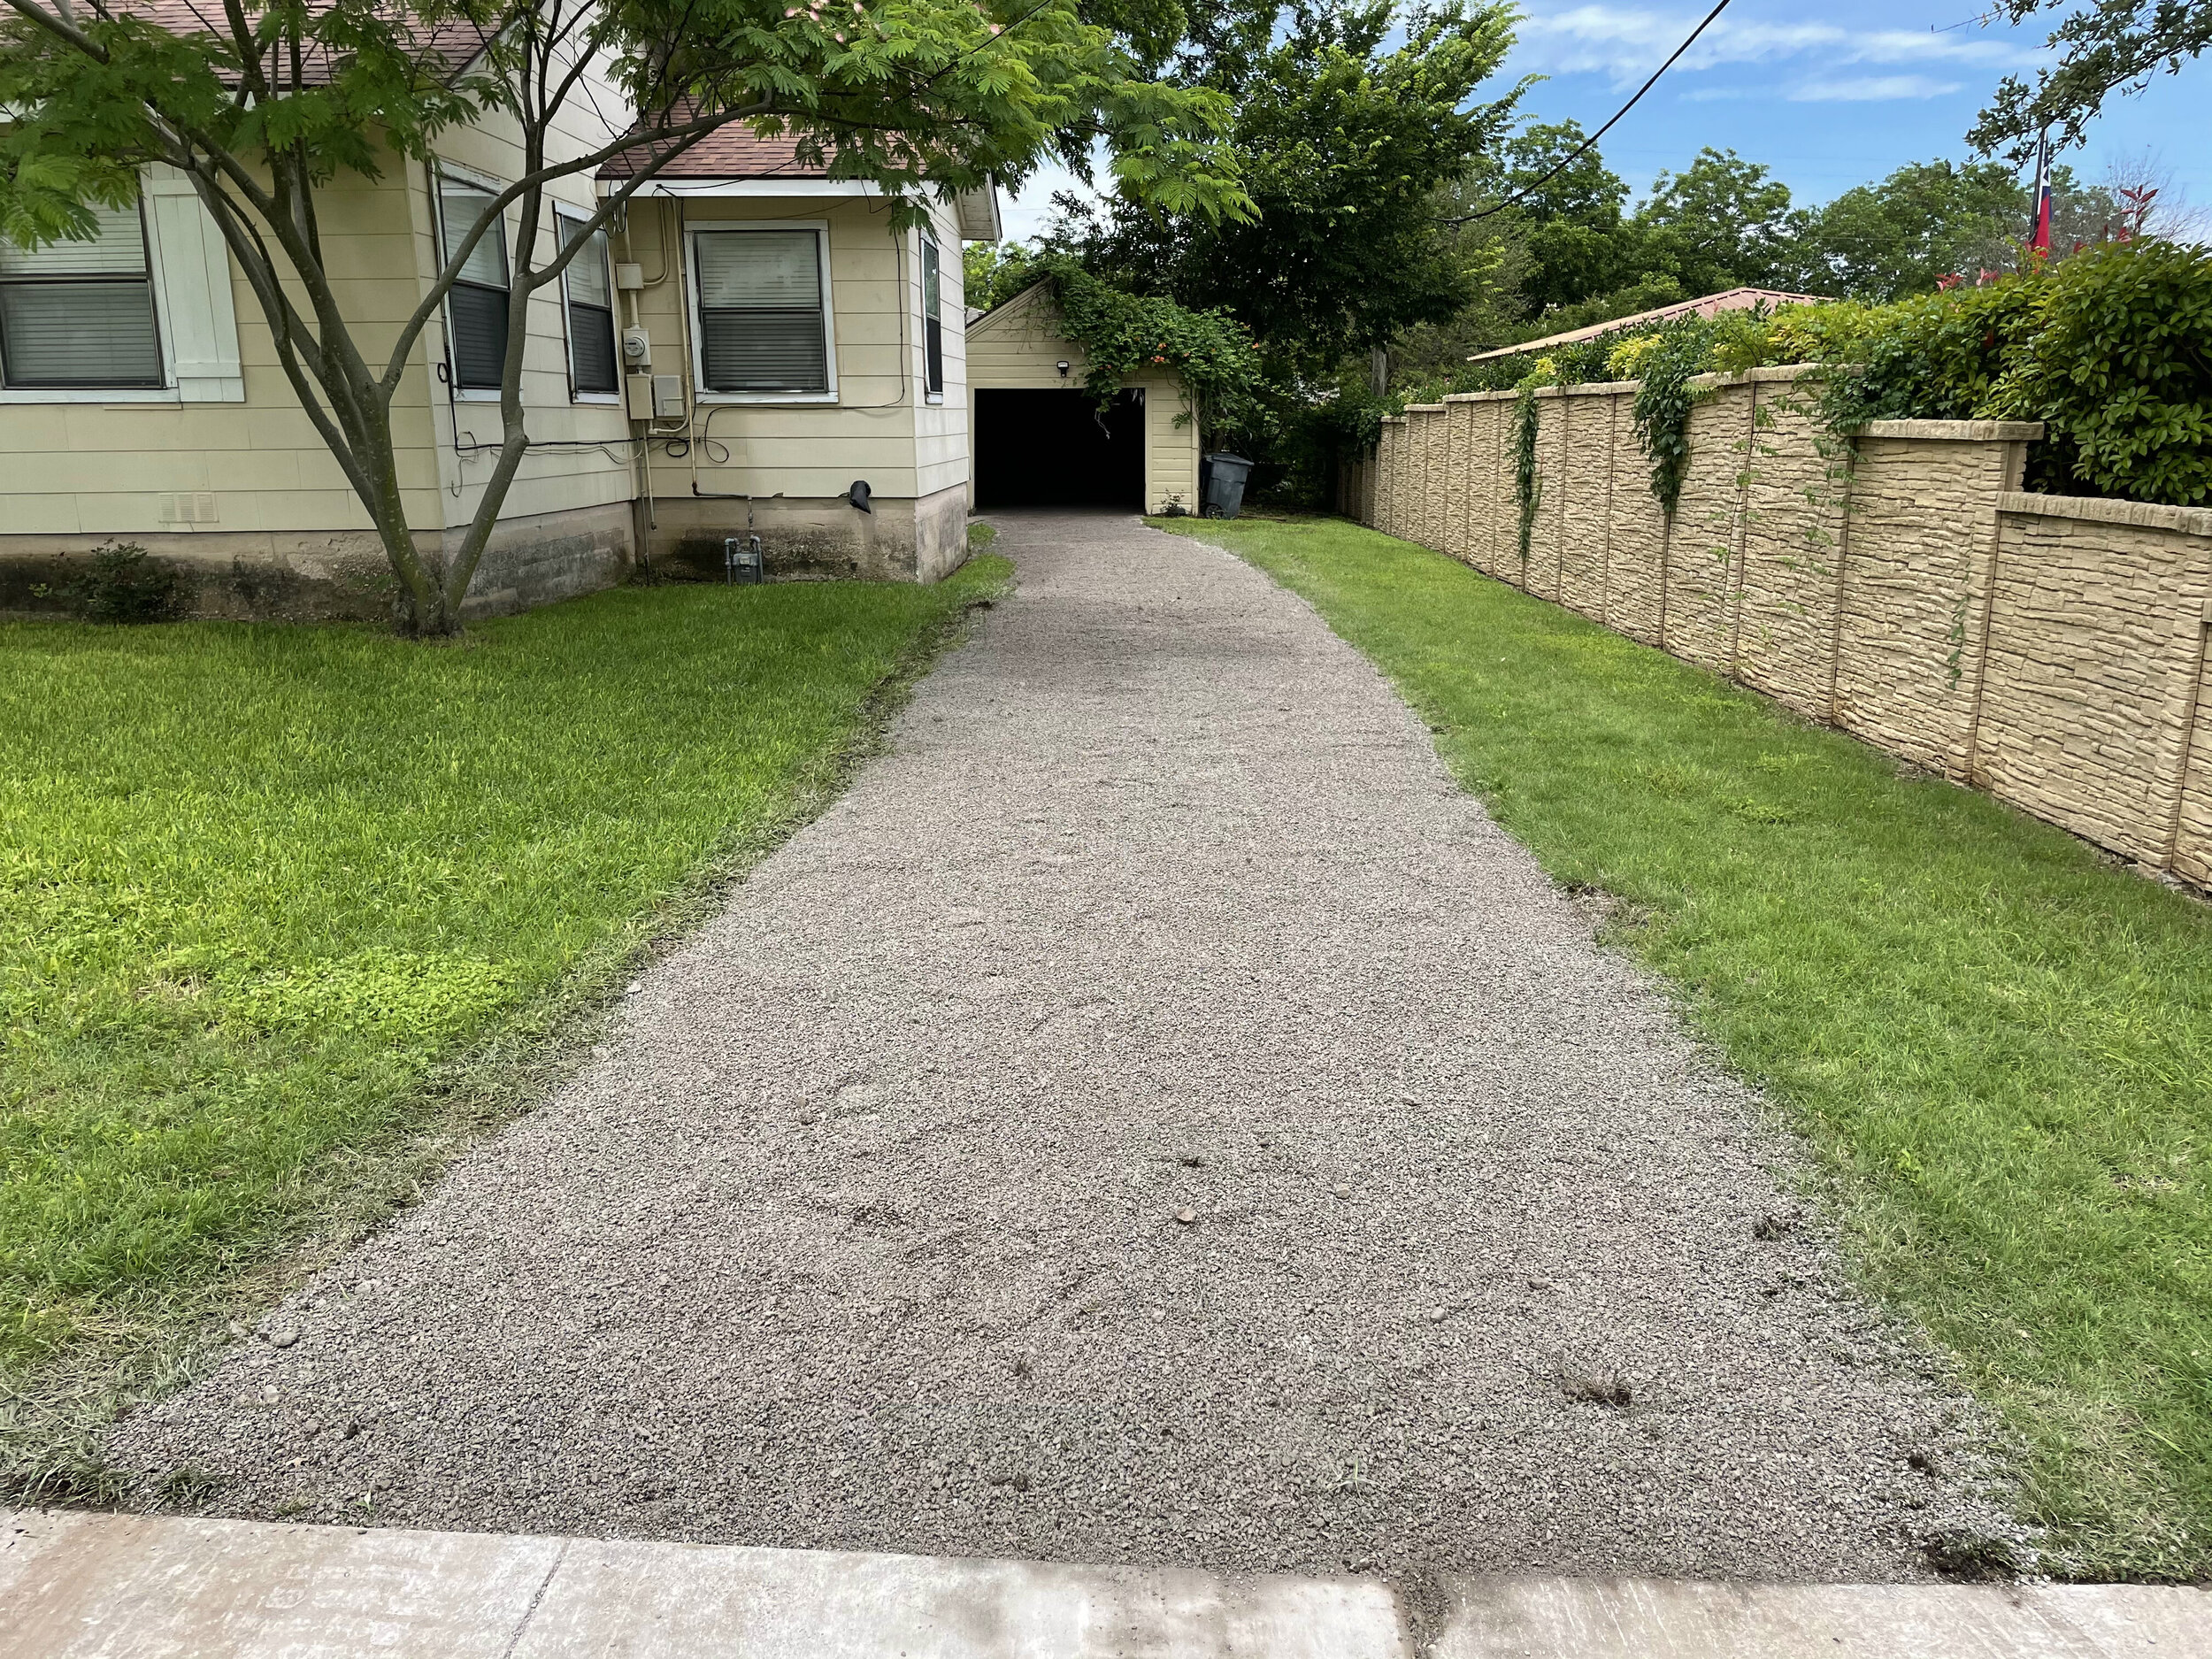 Gravel Driveway to Garage